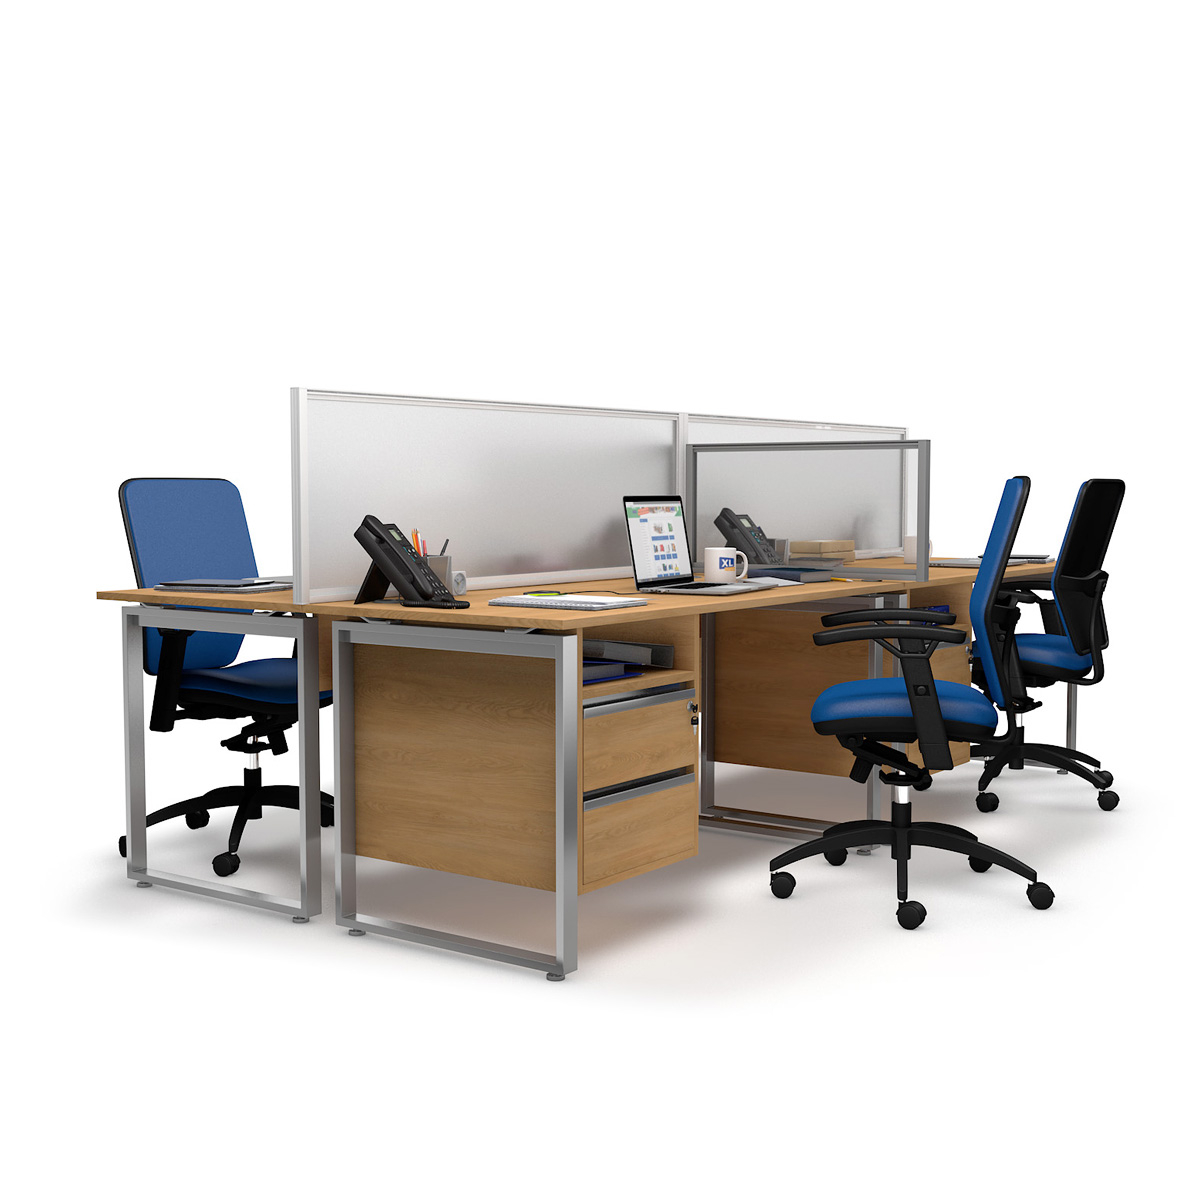 FRONTIER Glazed Office Screen Desk Dividers